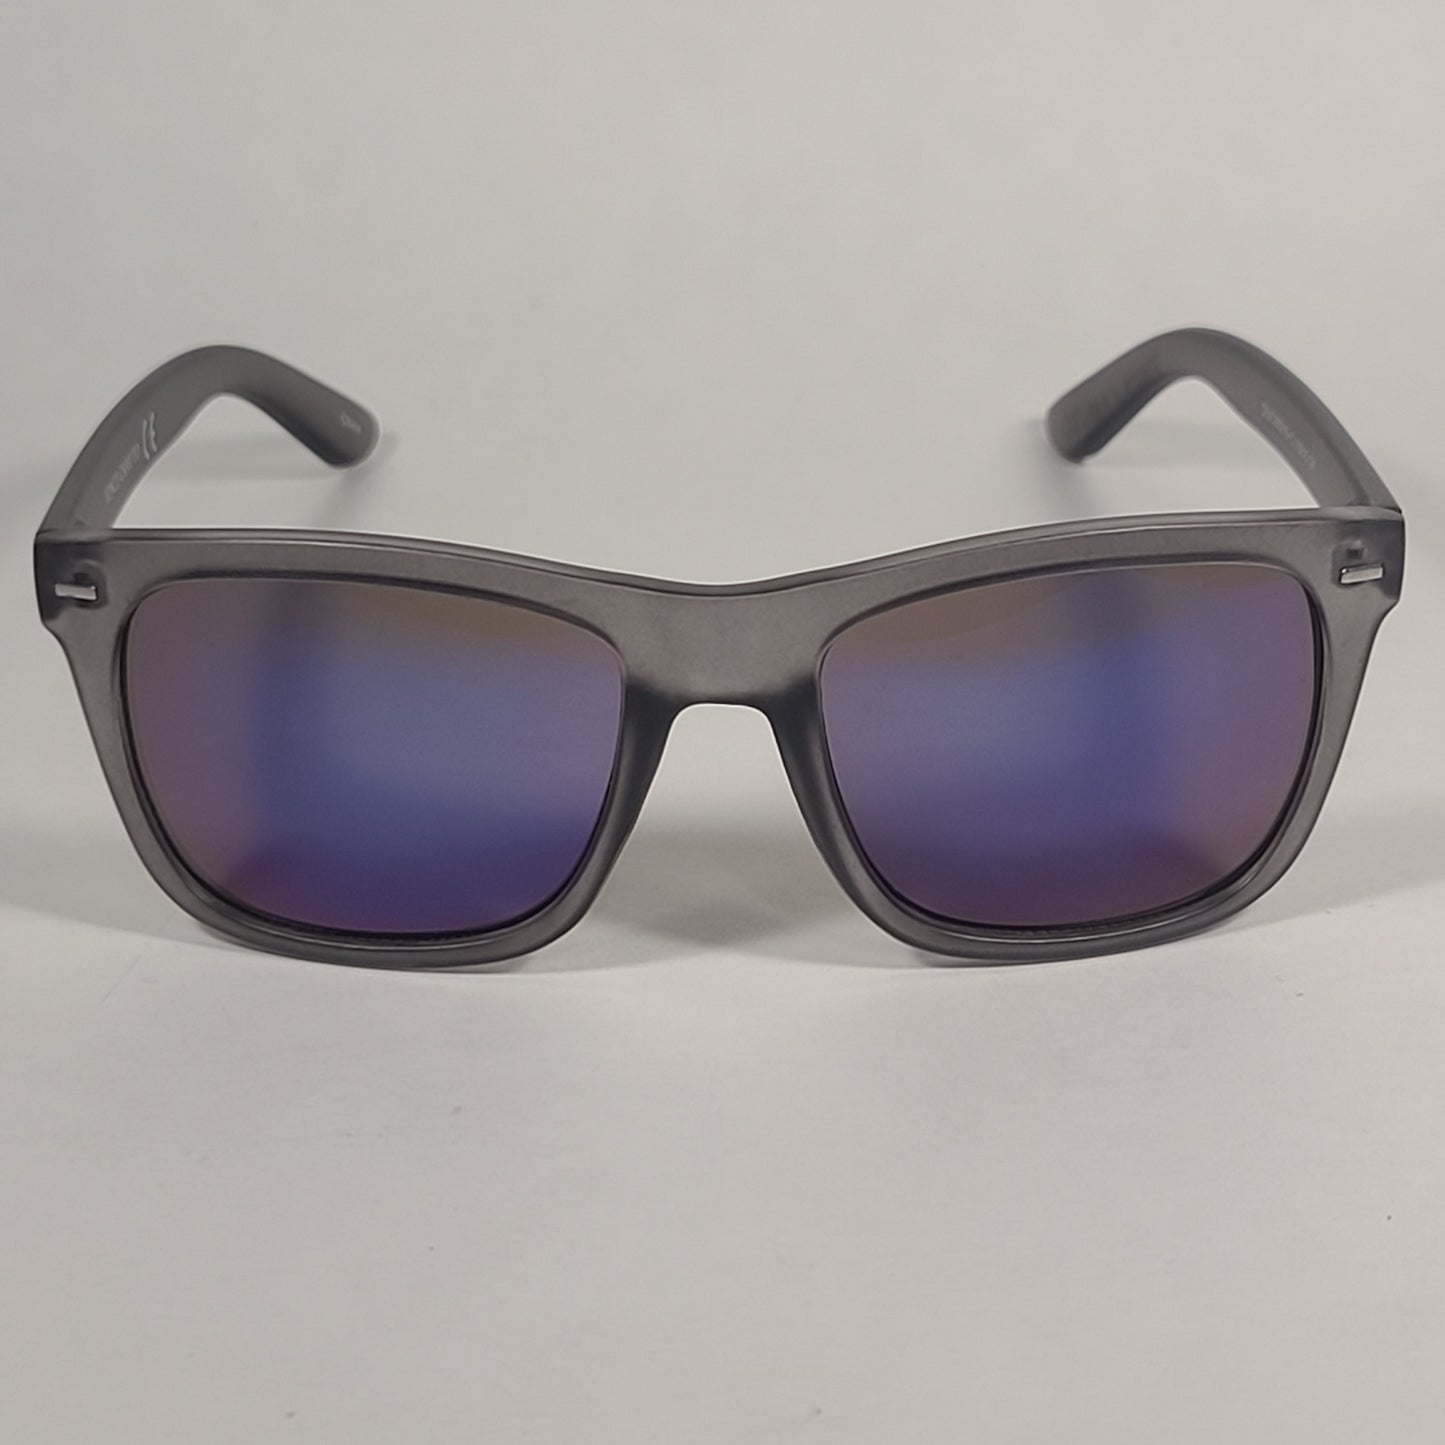 Vince Camuto Square Sunglasses Matte Gray Crystal Frame Blue / Violet Flash Lens VM615 GY - Sunglasses